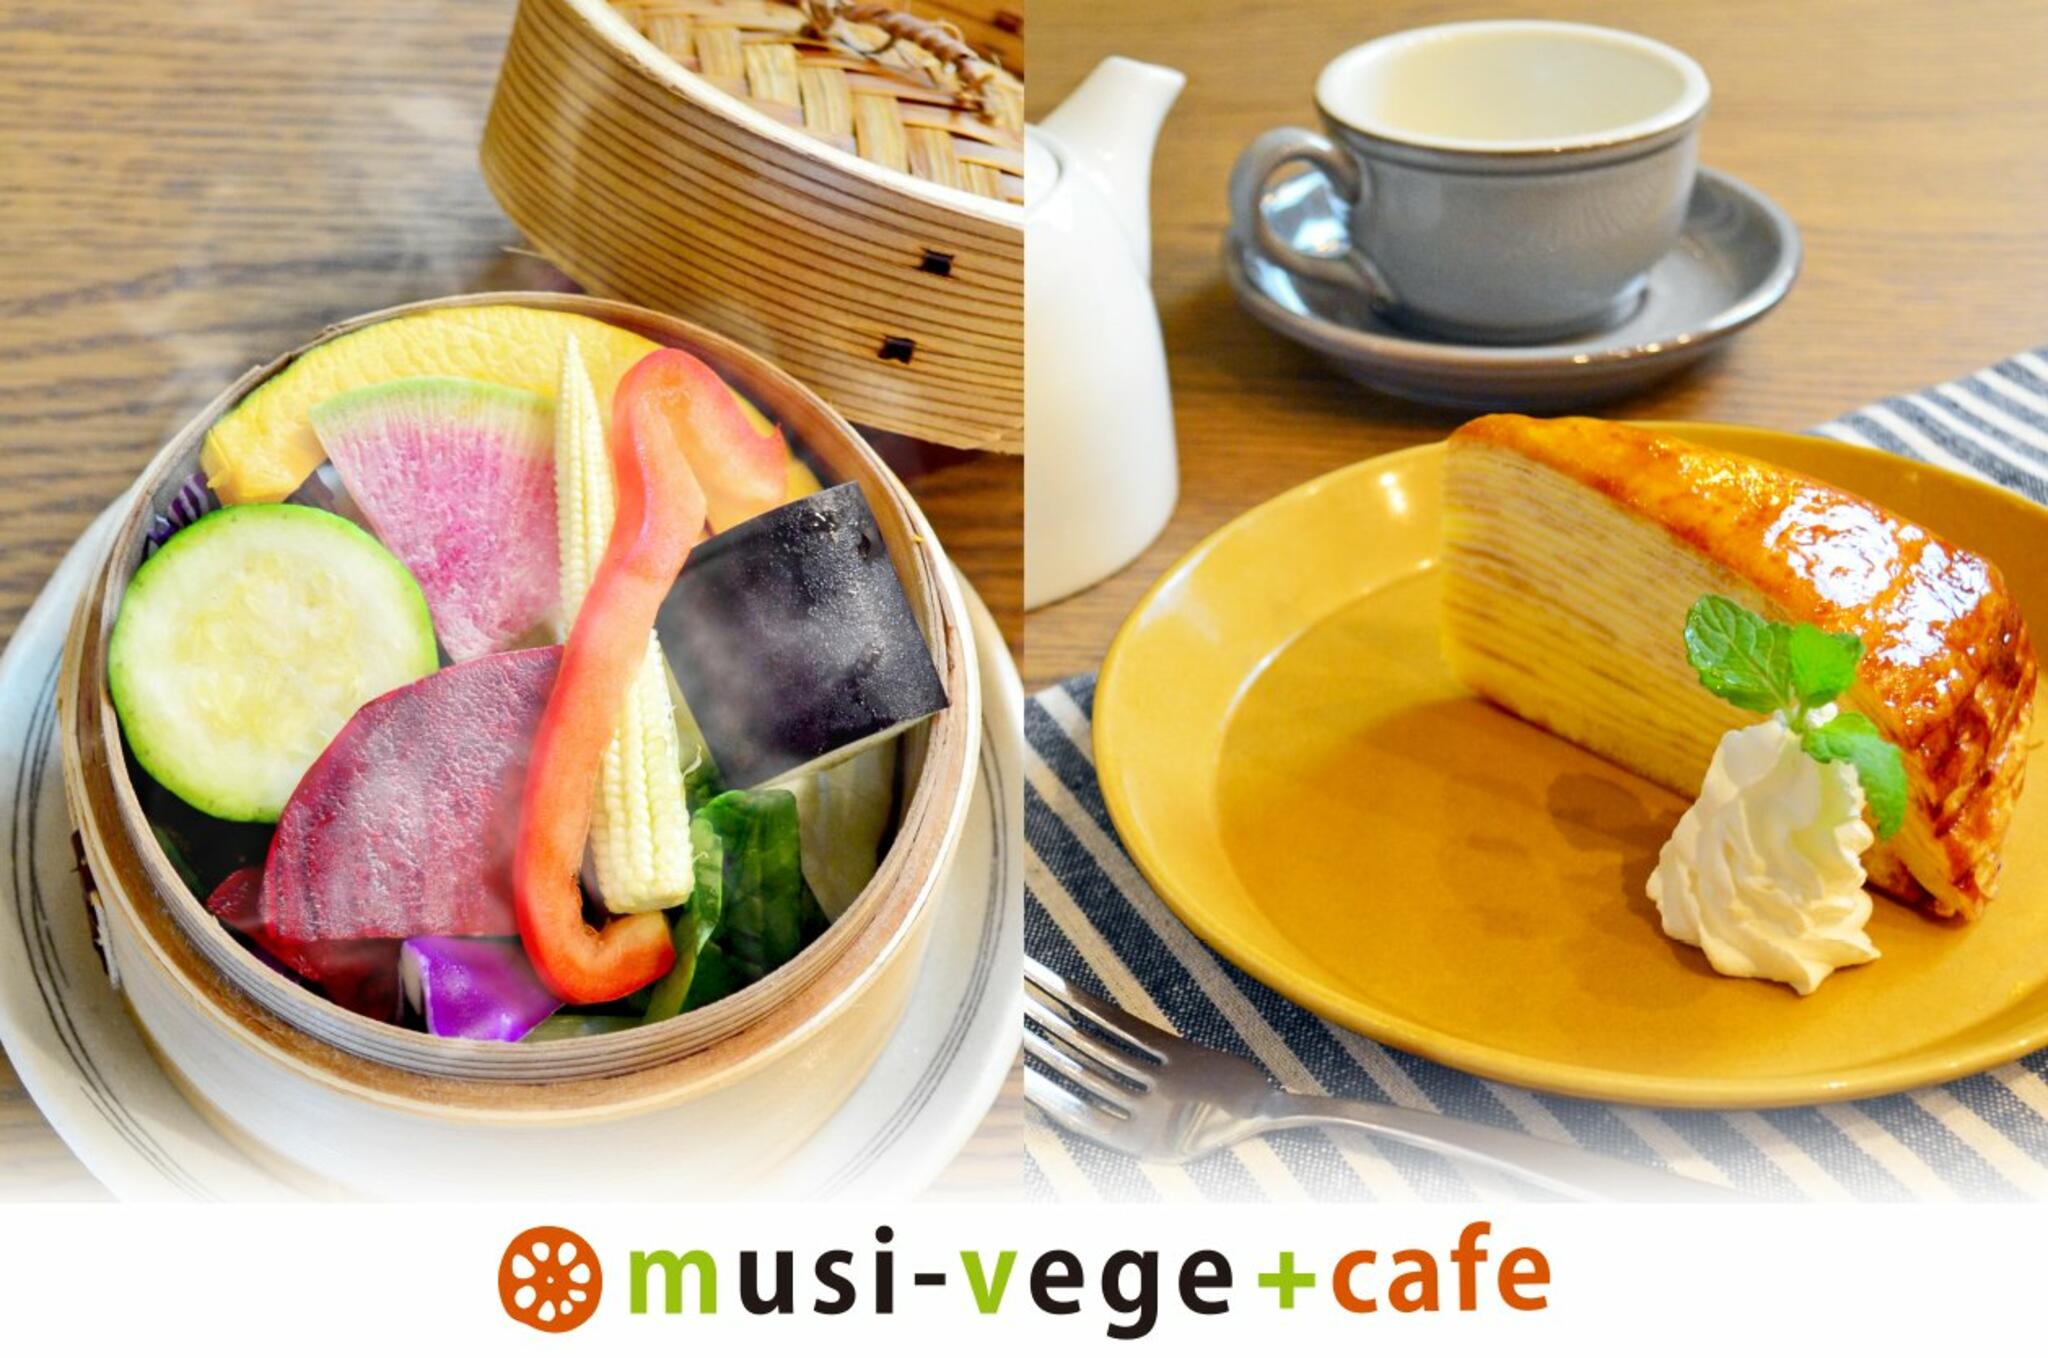 musi-vege+cafe なんばCITY店の代表写真1